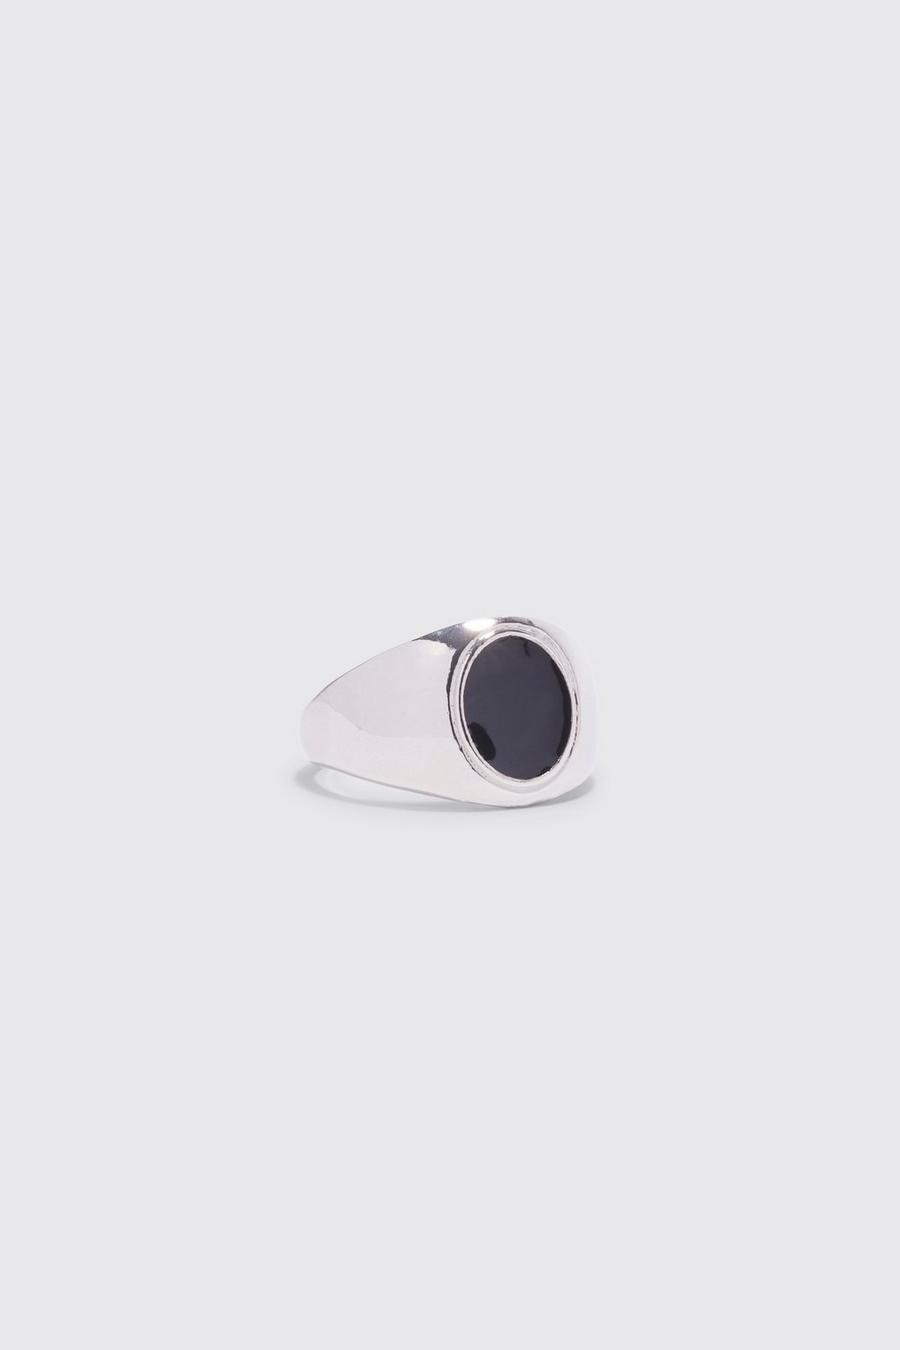 Silver Black Onyx Style Signet Ring